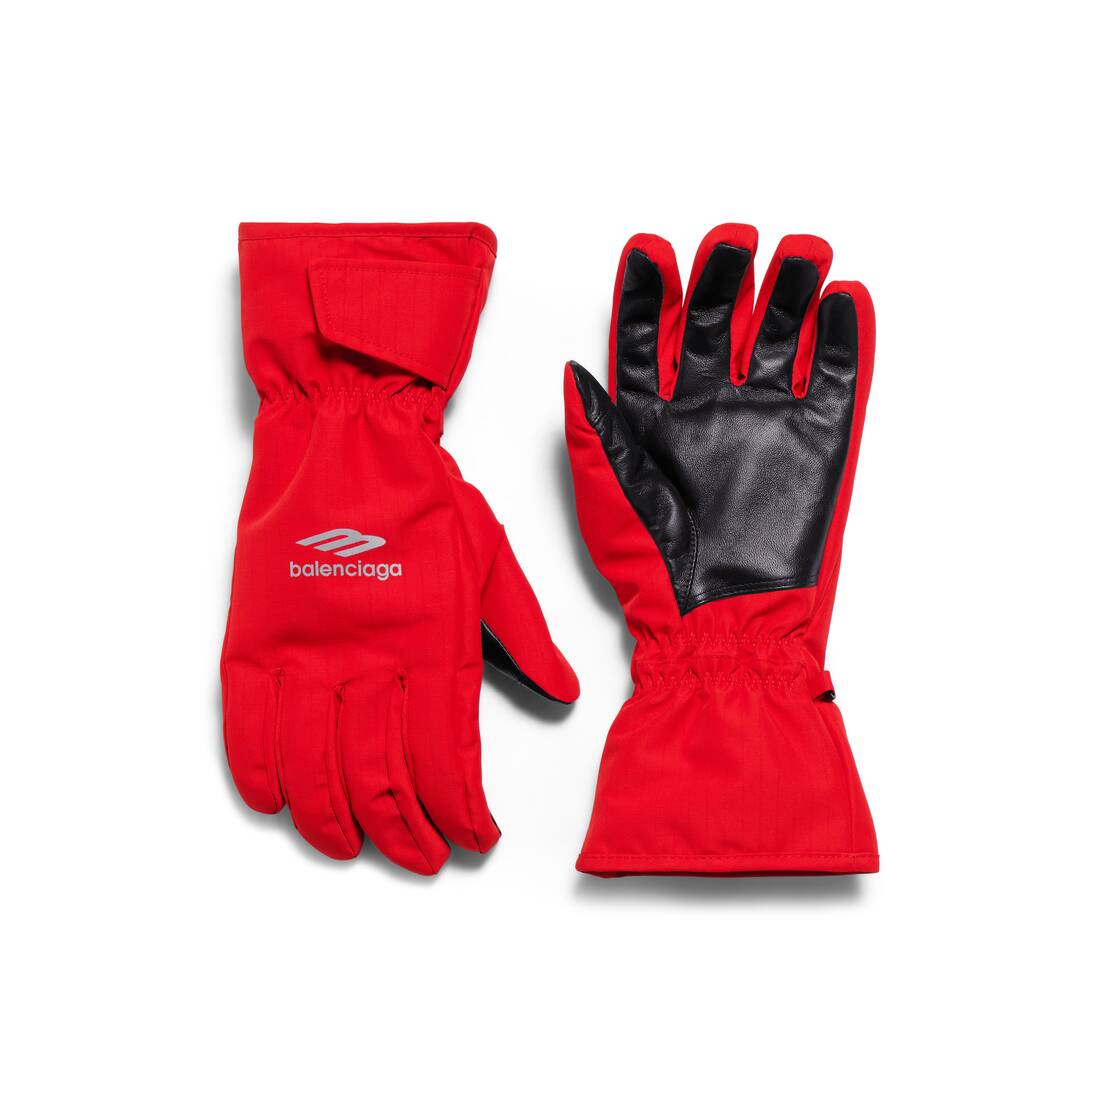 Skiwear - 3b Sports Icon Ski Gloves in Red